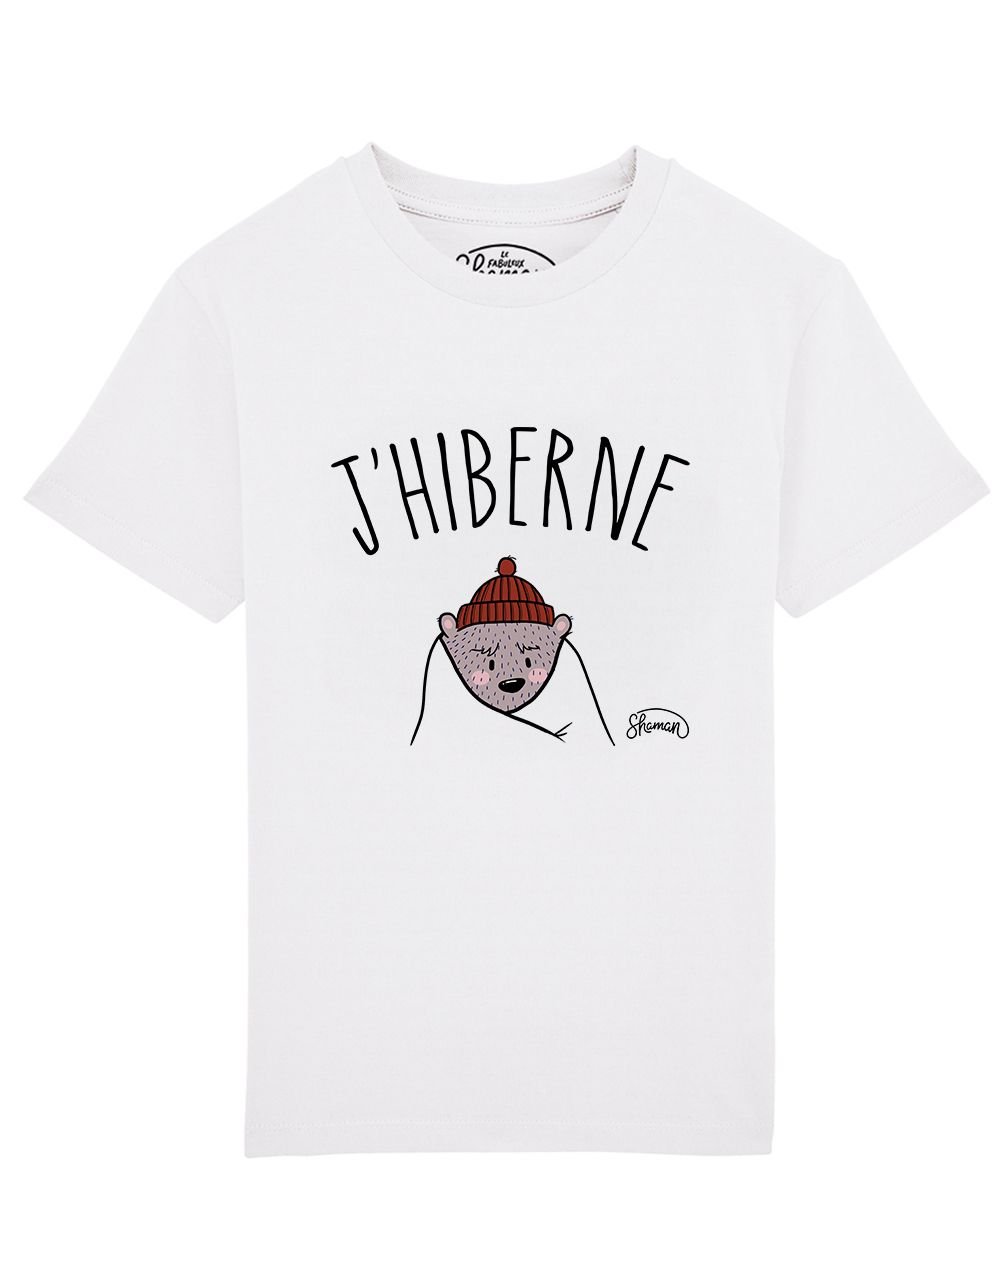 Tee shirt J'hiberne